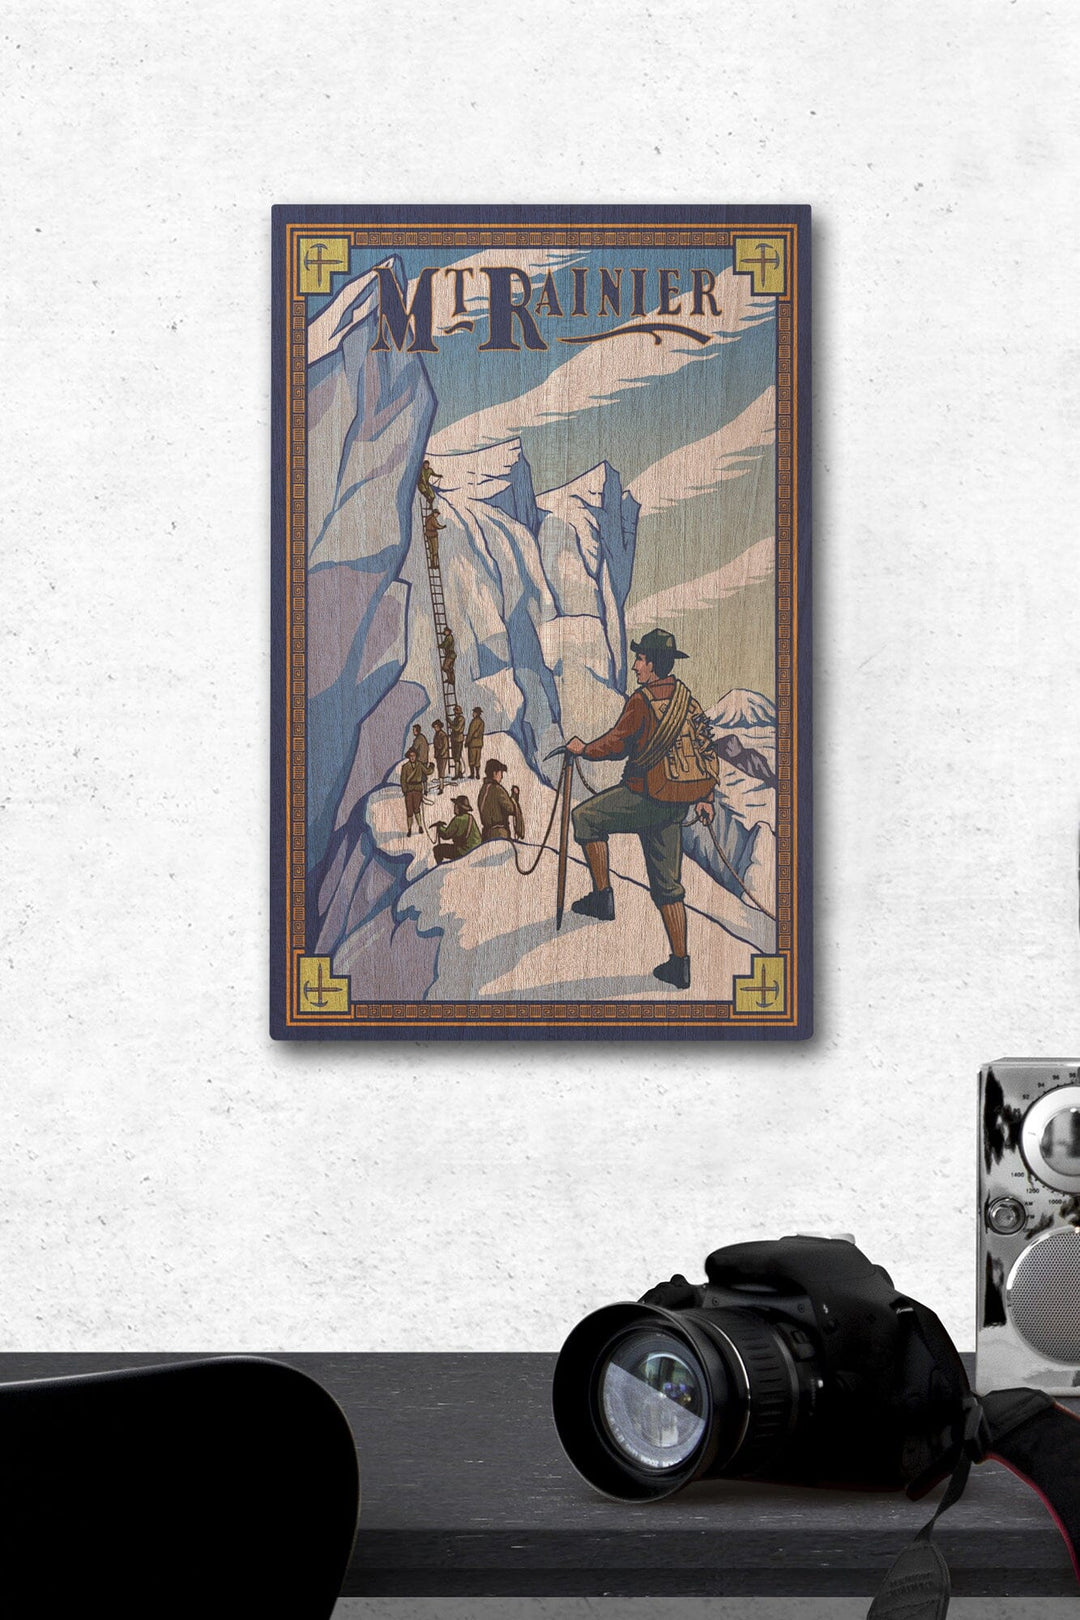 Mt Rainier, Washington, Ice Climbers, Lantern Press Artwork, Wood Signs and Postcards Wood Lantern Press 12 x 18 Wood Gallery Print 